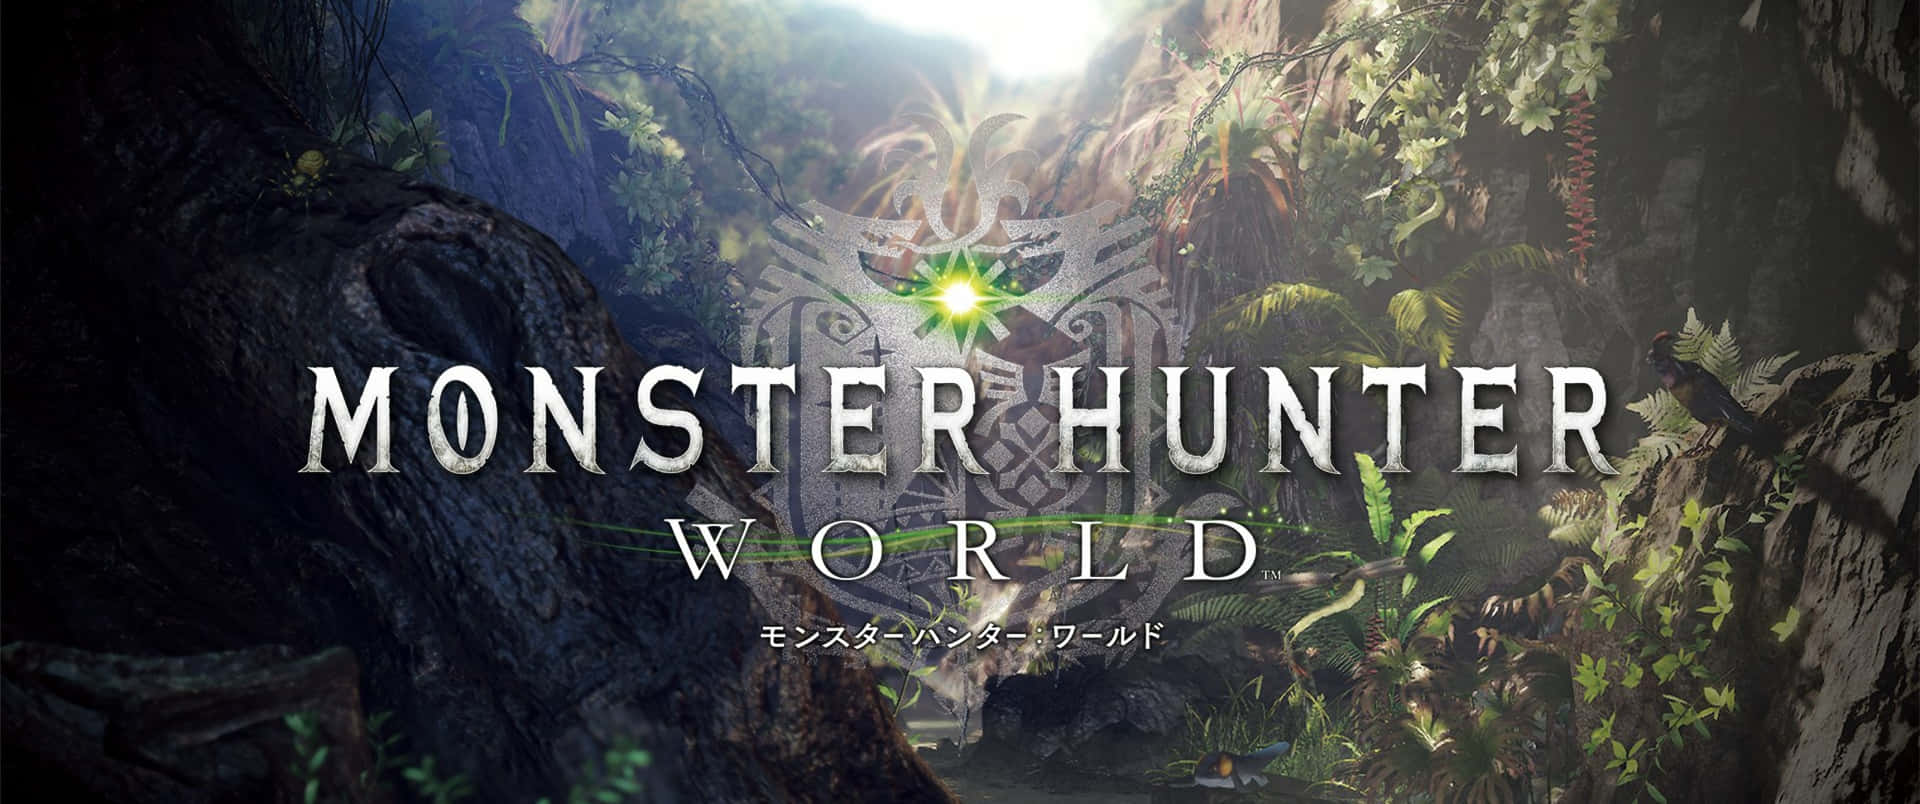 3440x1440p Fondods De Monster Hunter World